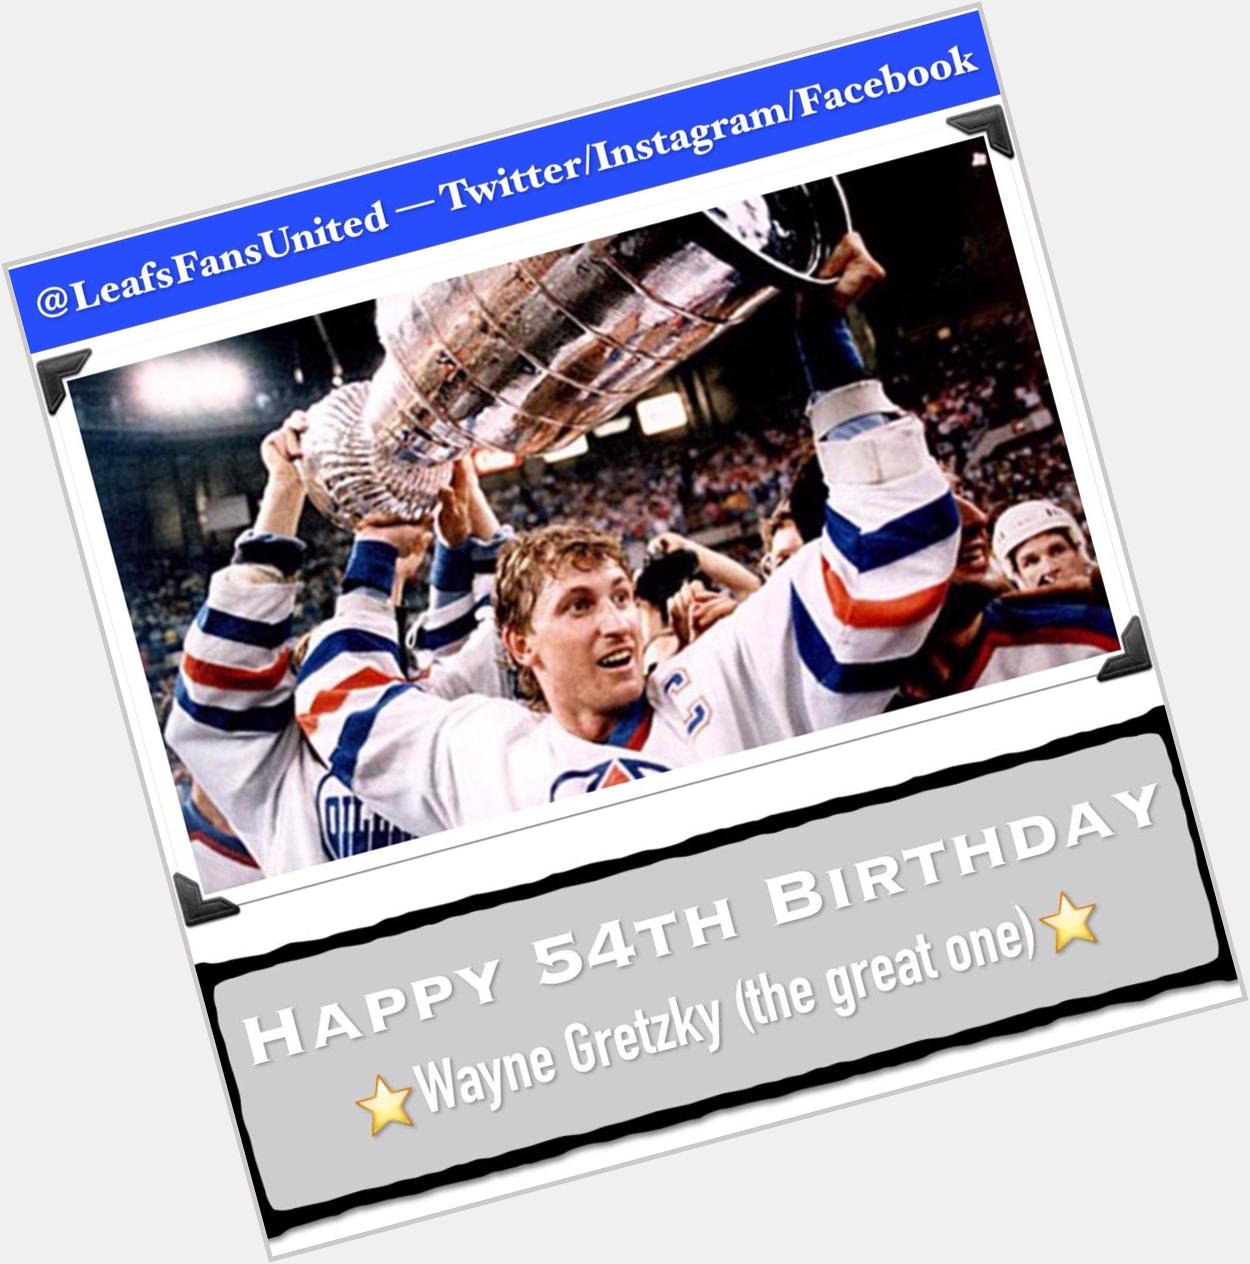 Happy 54th Birthday to the great one!!!
Wayne Gretzky.  